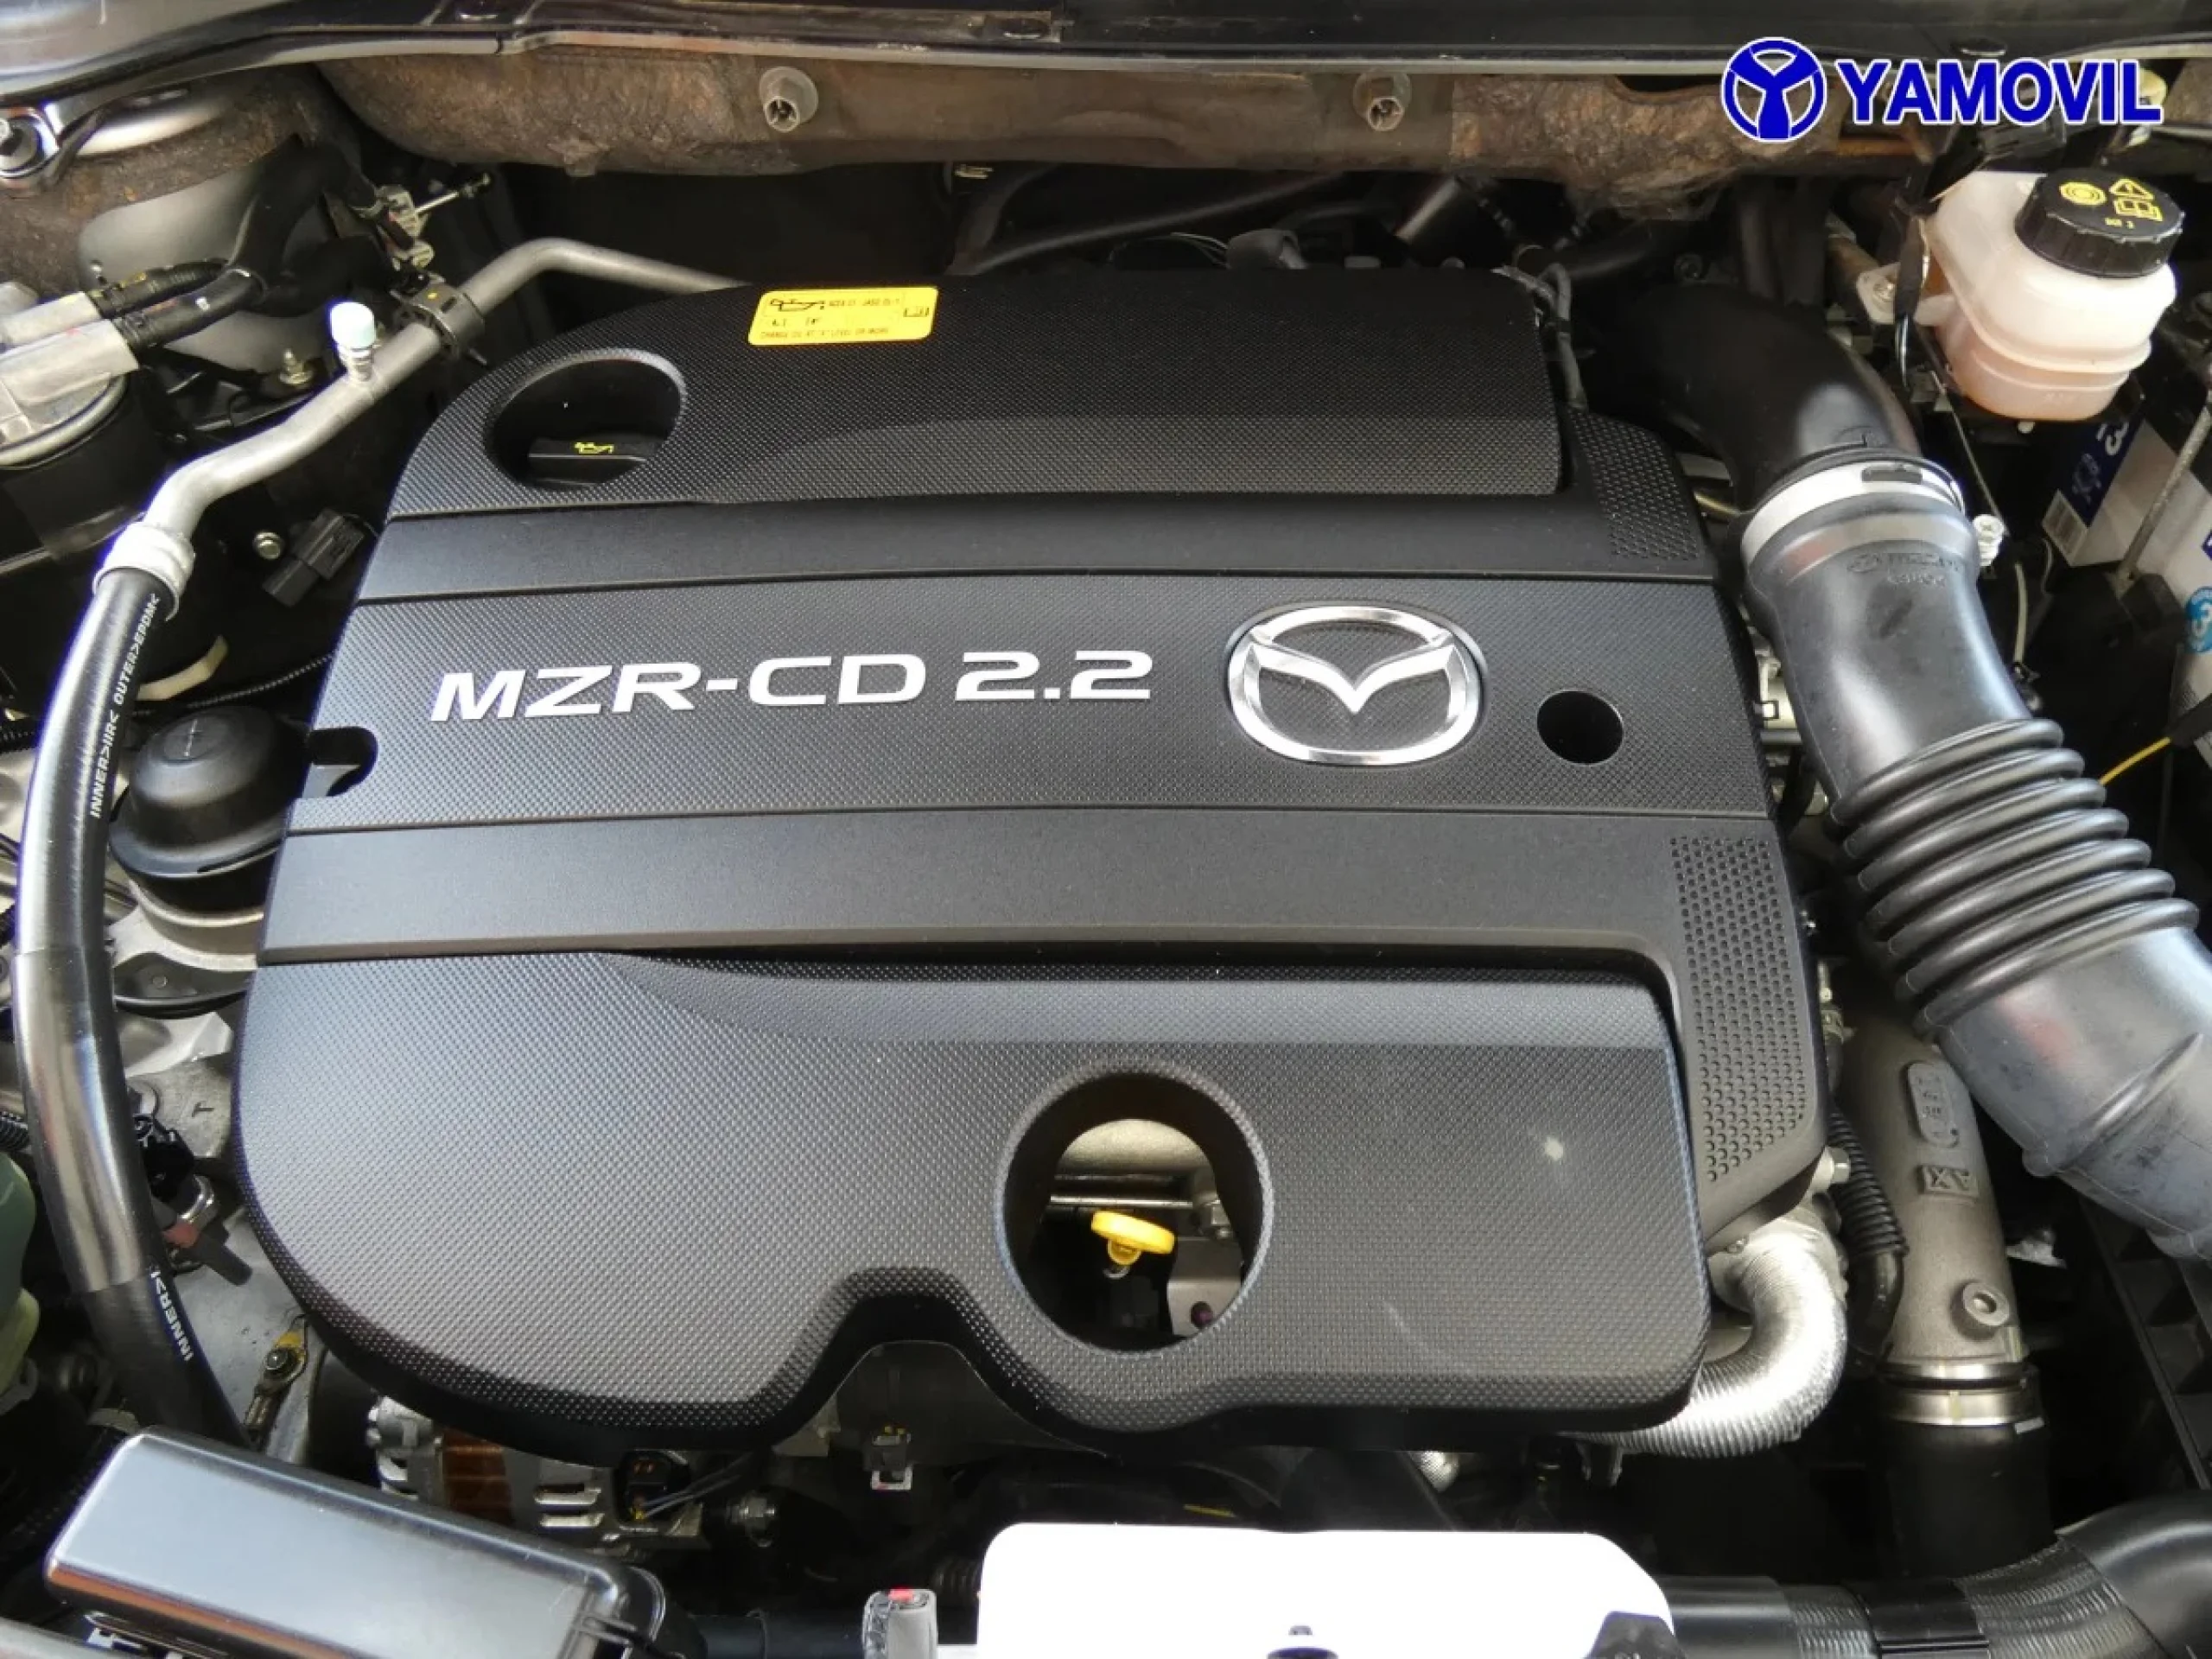 Mazda CX-7 2.2 CRTD Luxury 127 kW (173 CV) - Foto 8